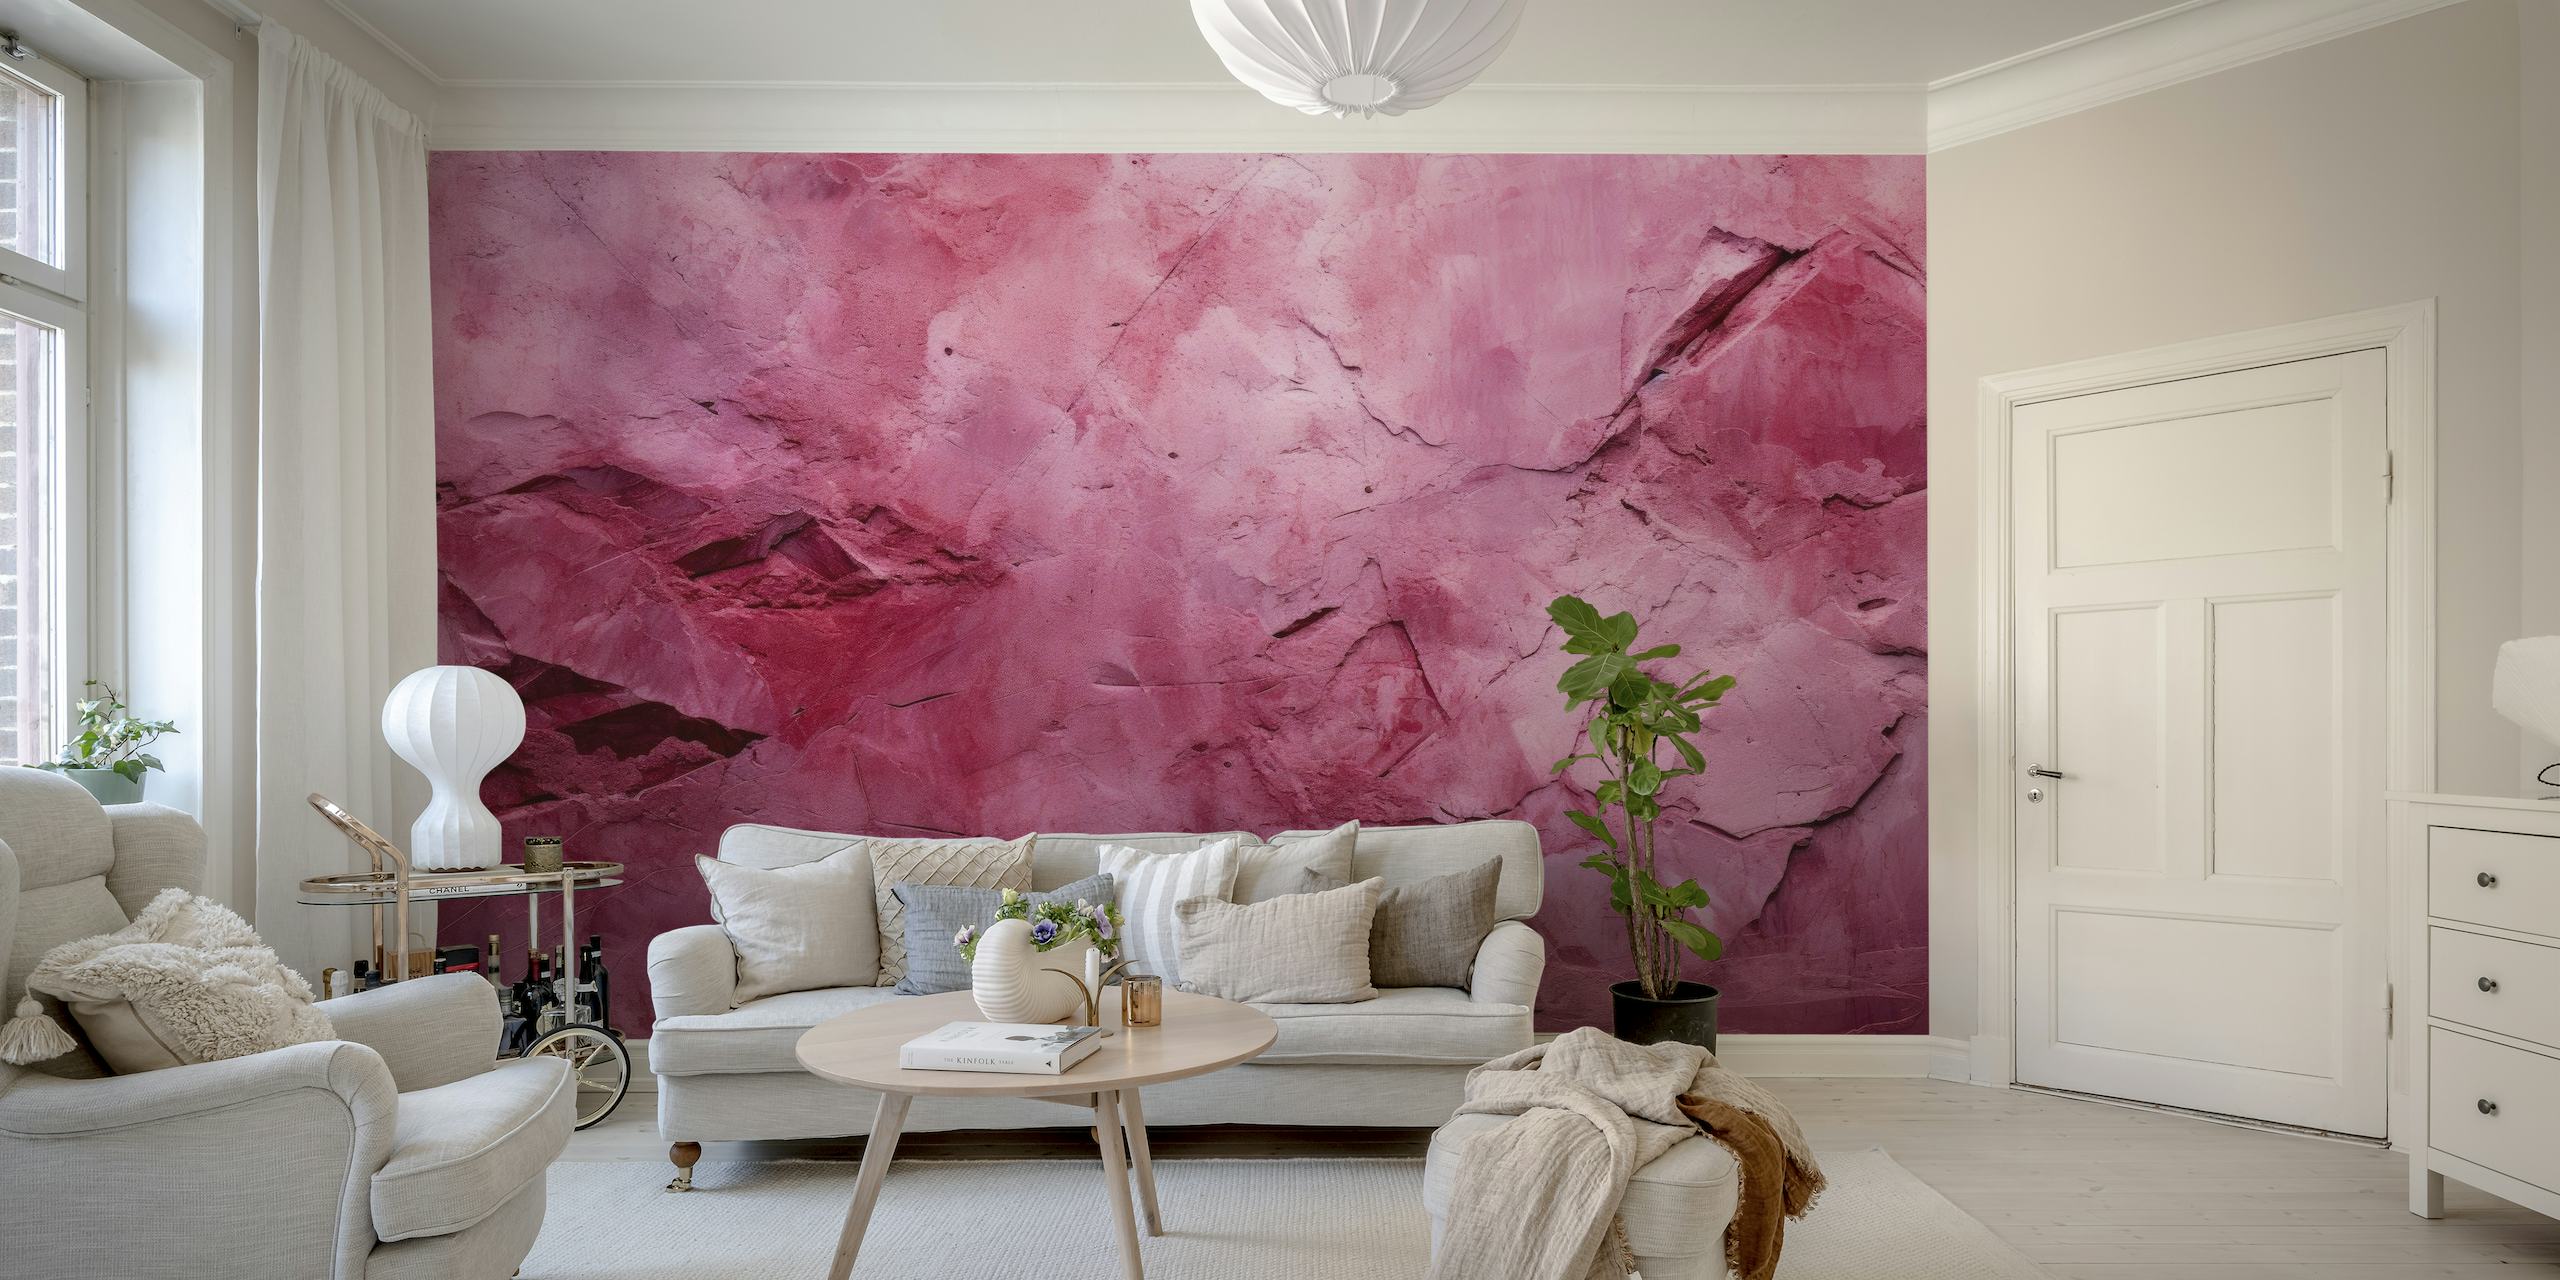 Pink Textured Wall Finish papel pintado